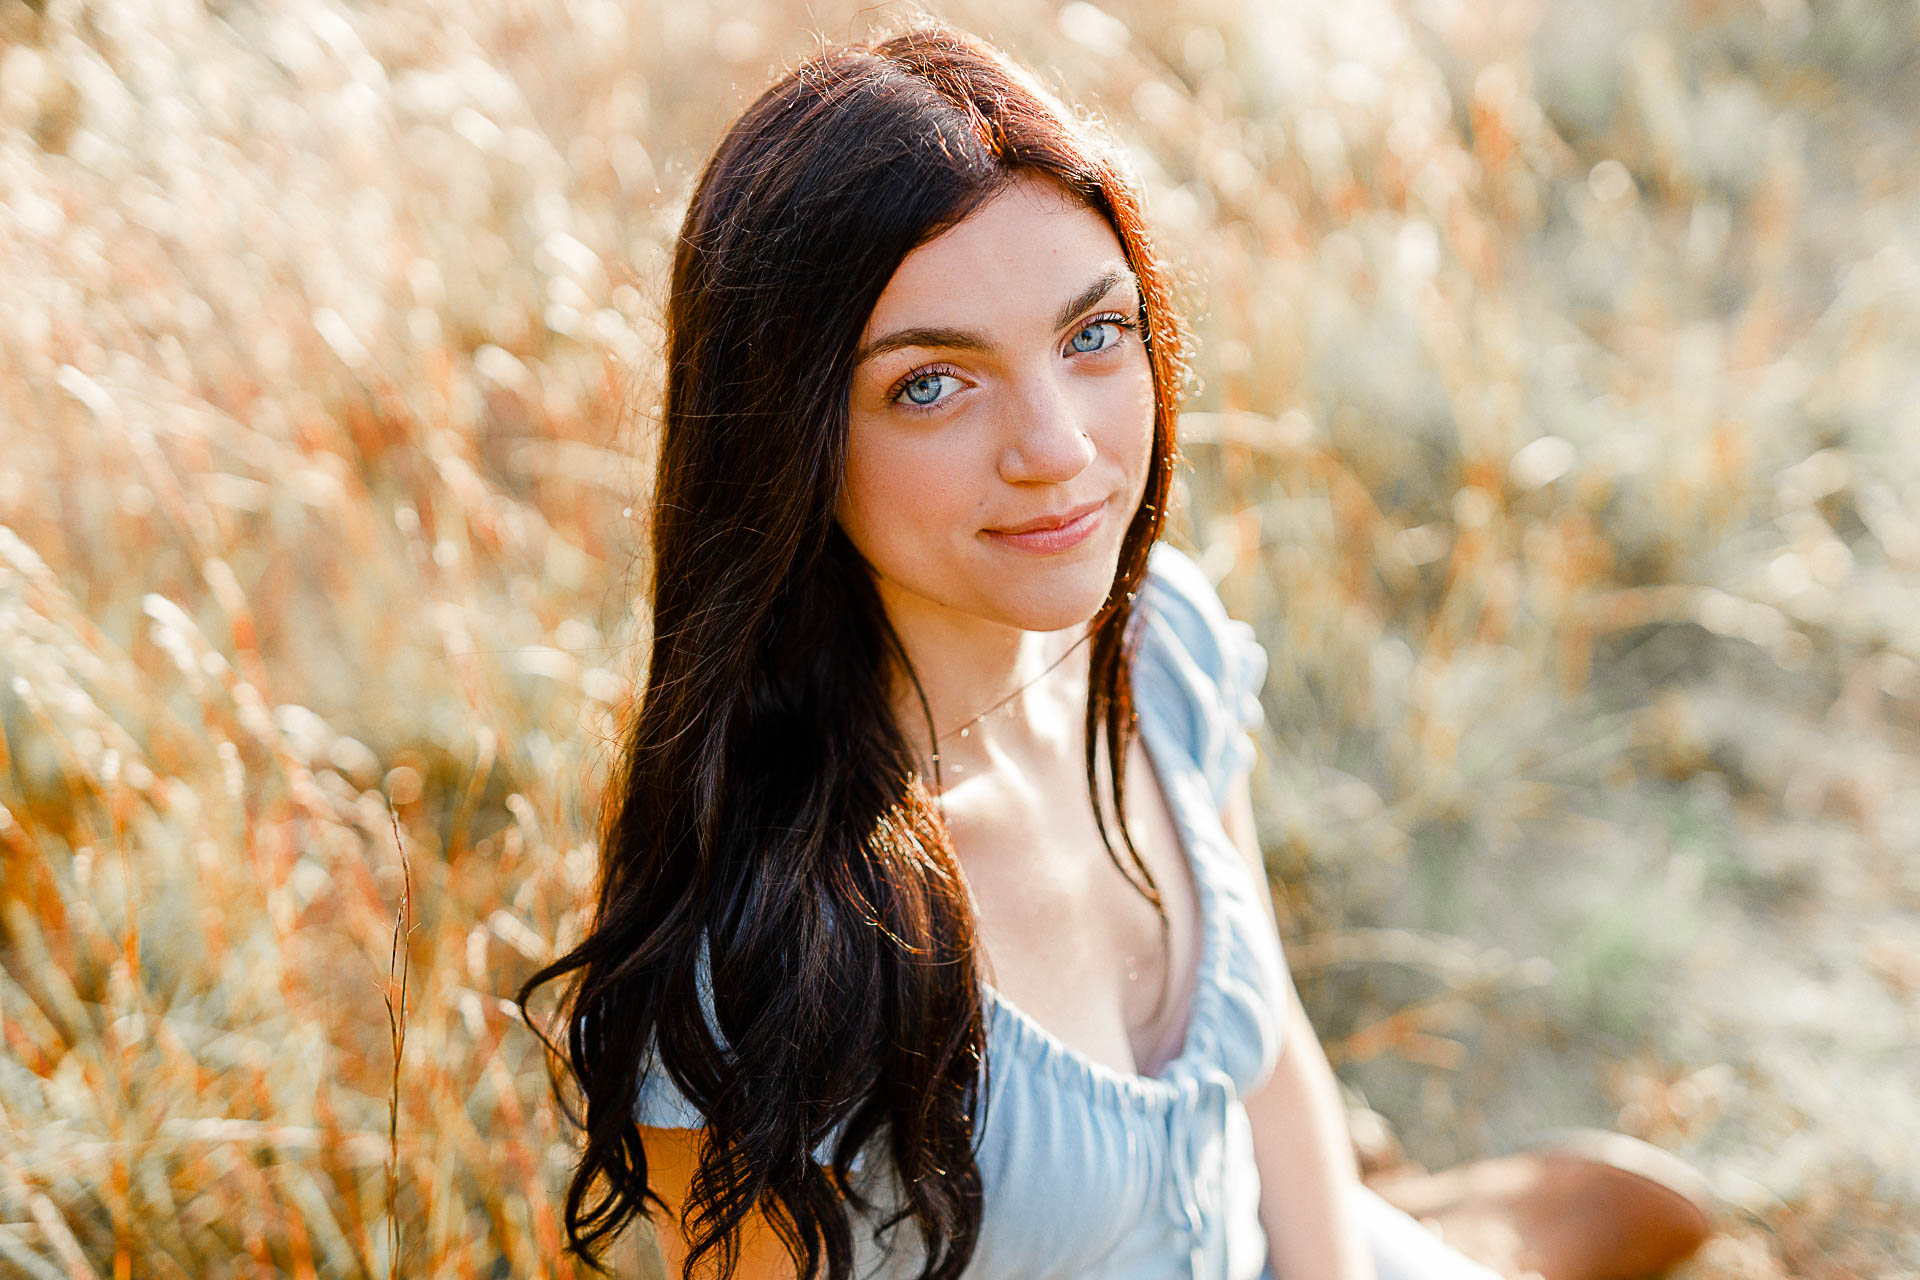 Photo by Duxbury senior photographer Christina Runnals | A high school senior girl with big blue eyes sitting in a golden field